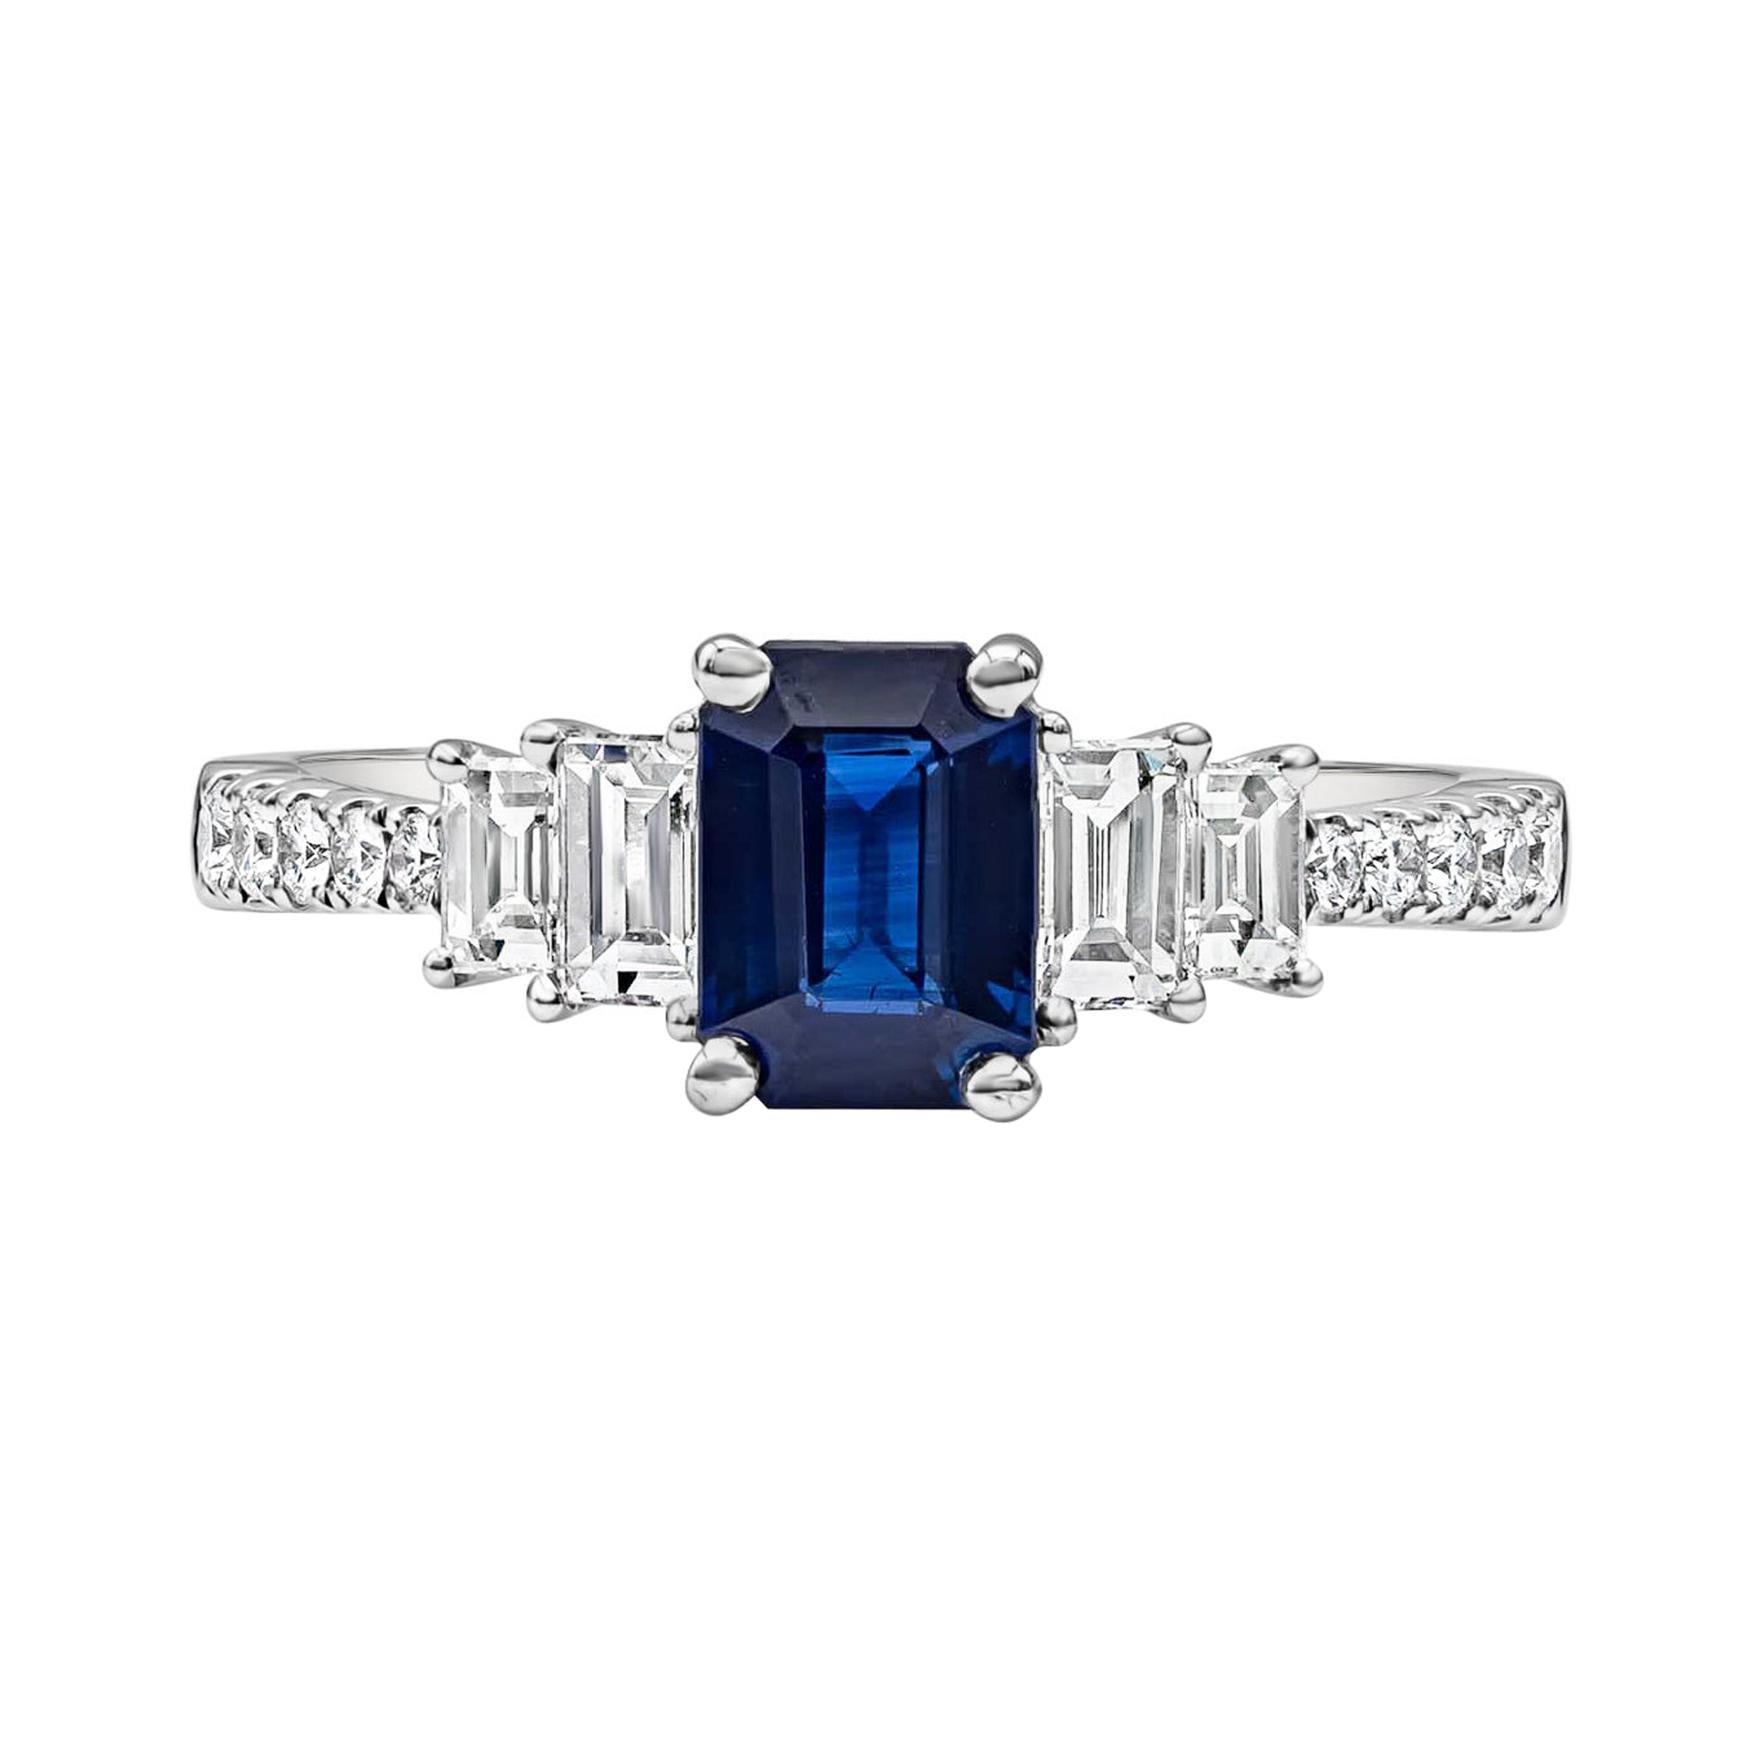 Roman Malakov 1.17 Carat Emerald Cut Blue Sapphire and Diamond Engagement Ring